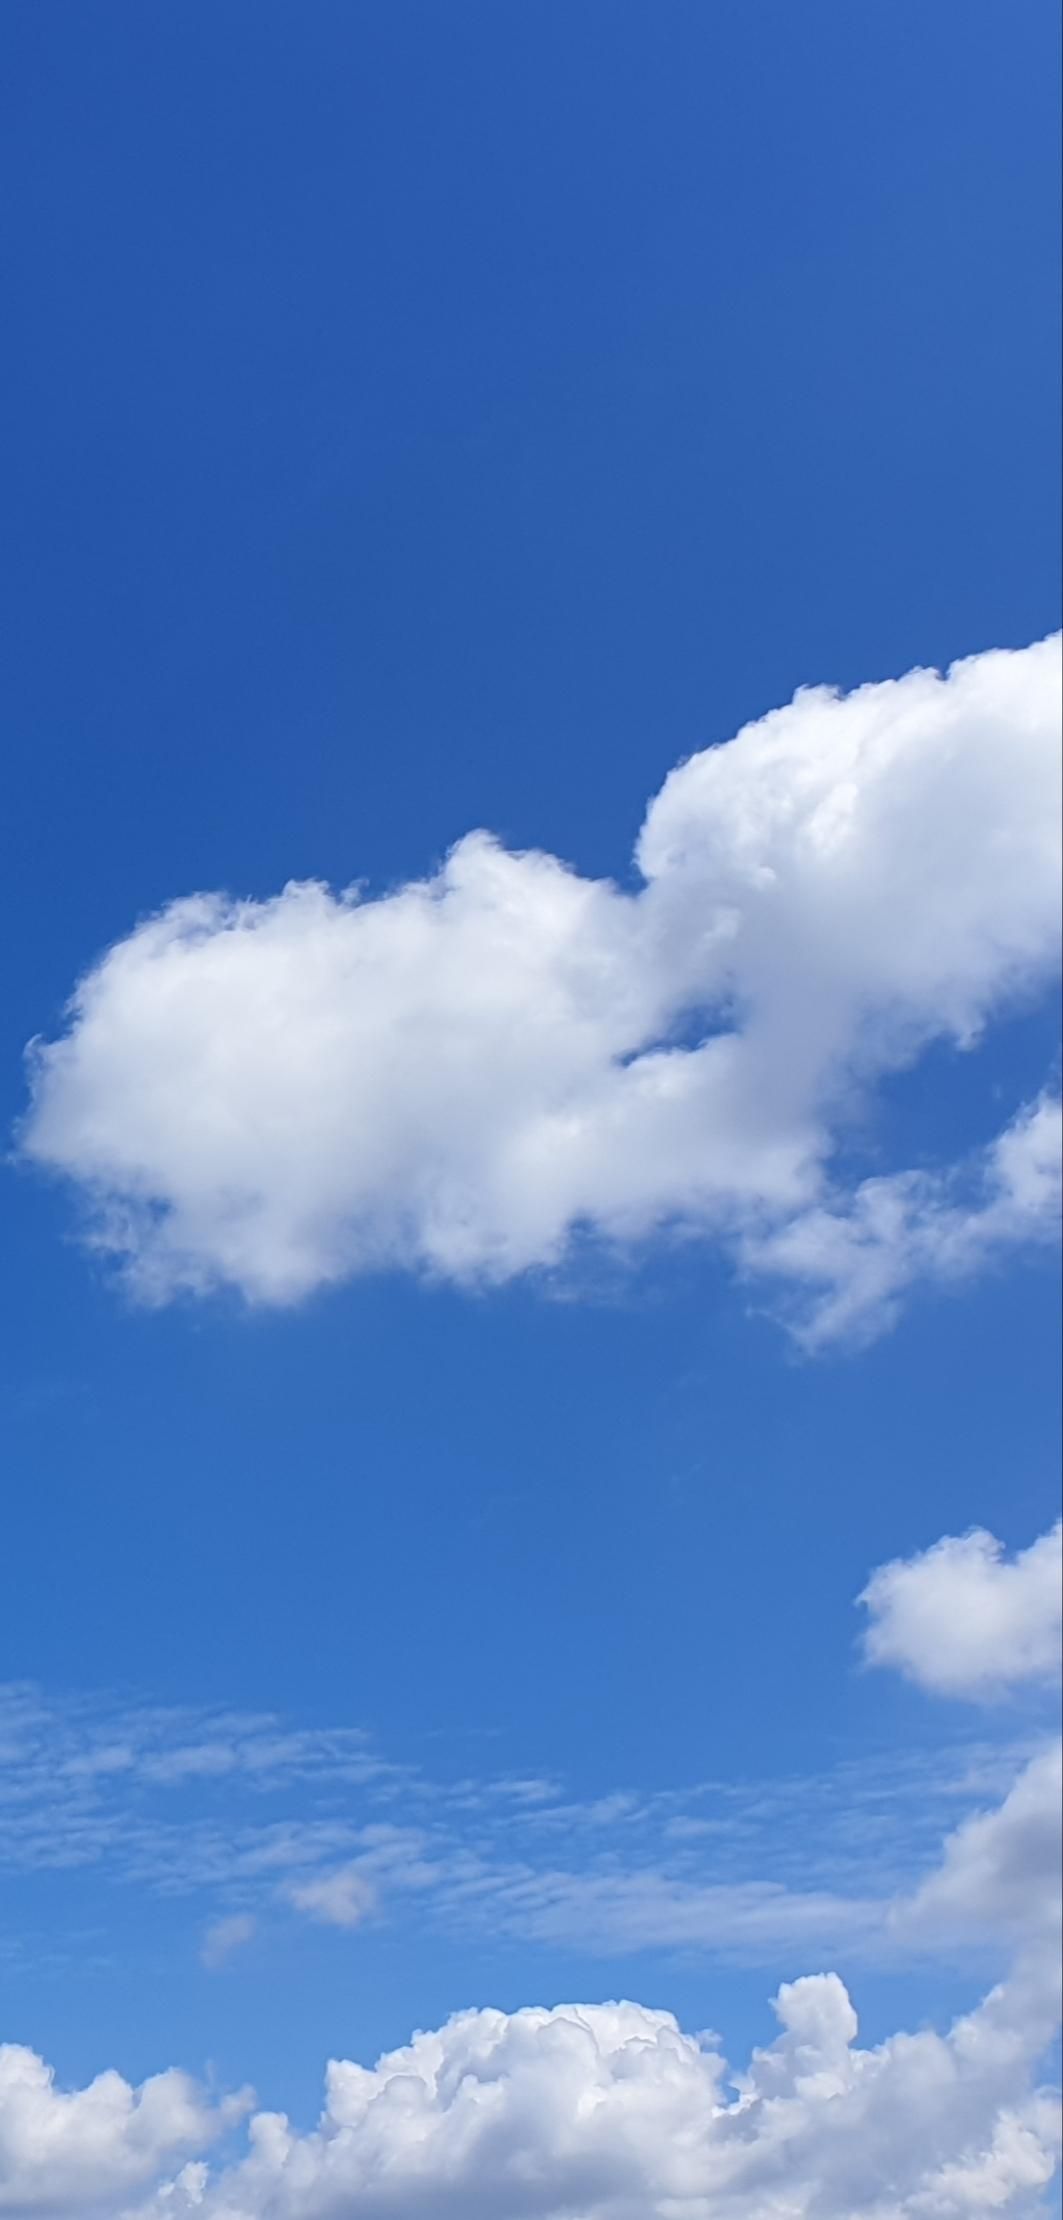 UK Blue Sky. Blue sky wallpaper, iPhone wallpaper sky, Blue wallpaper iphone